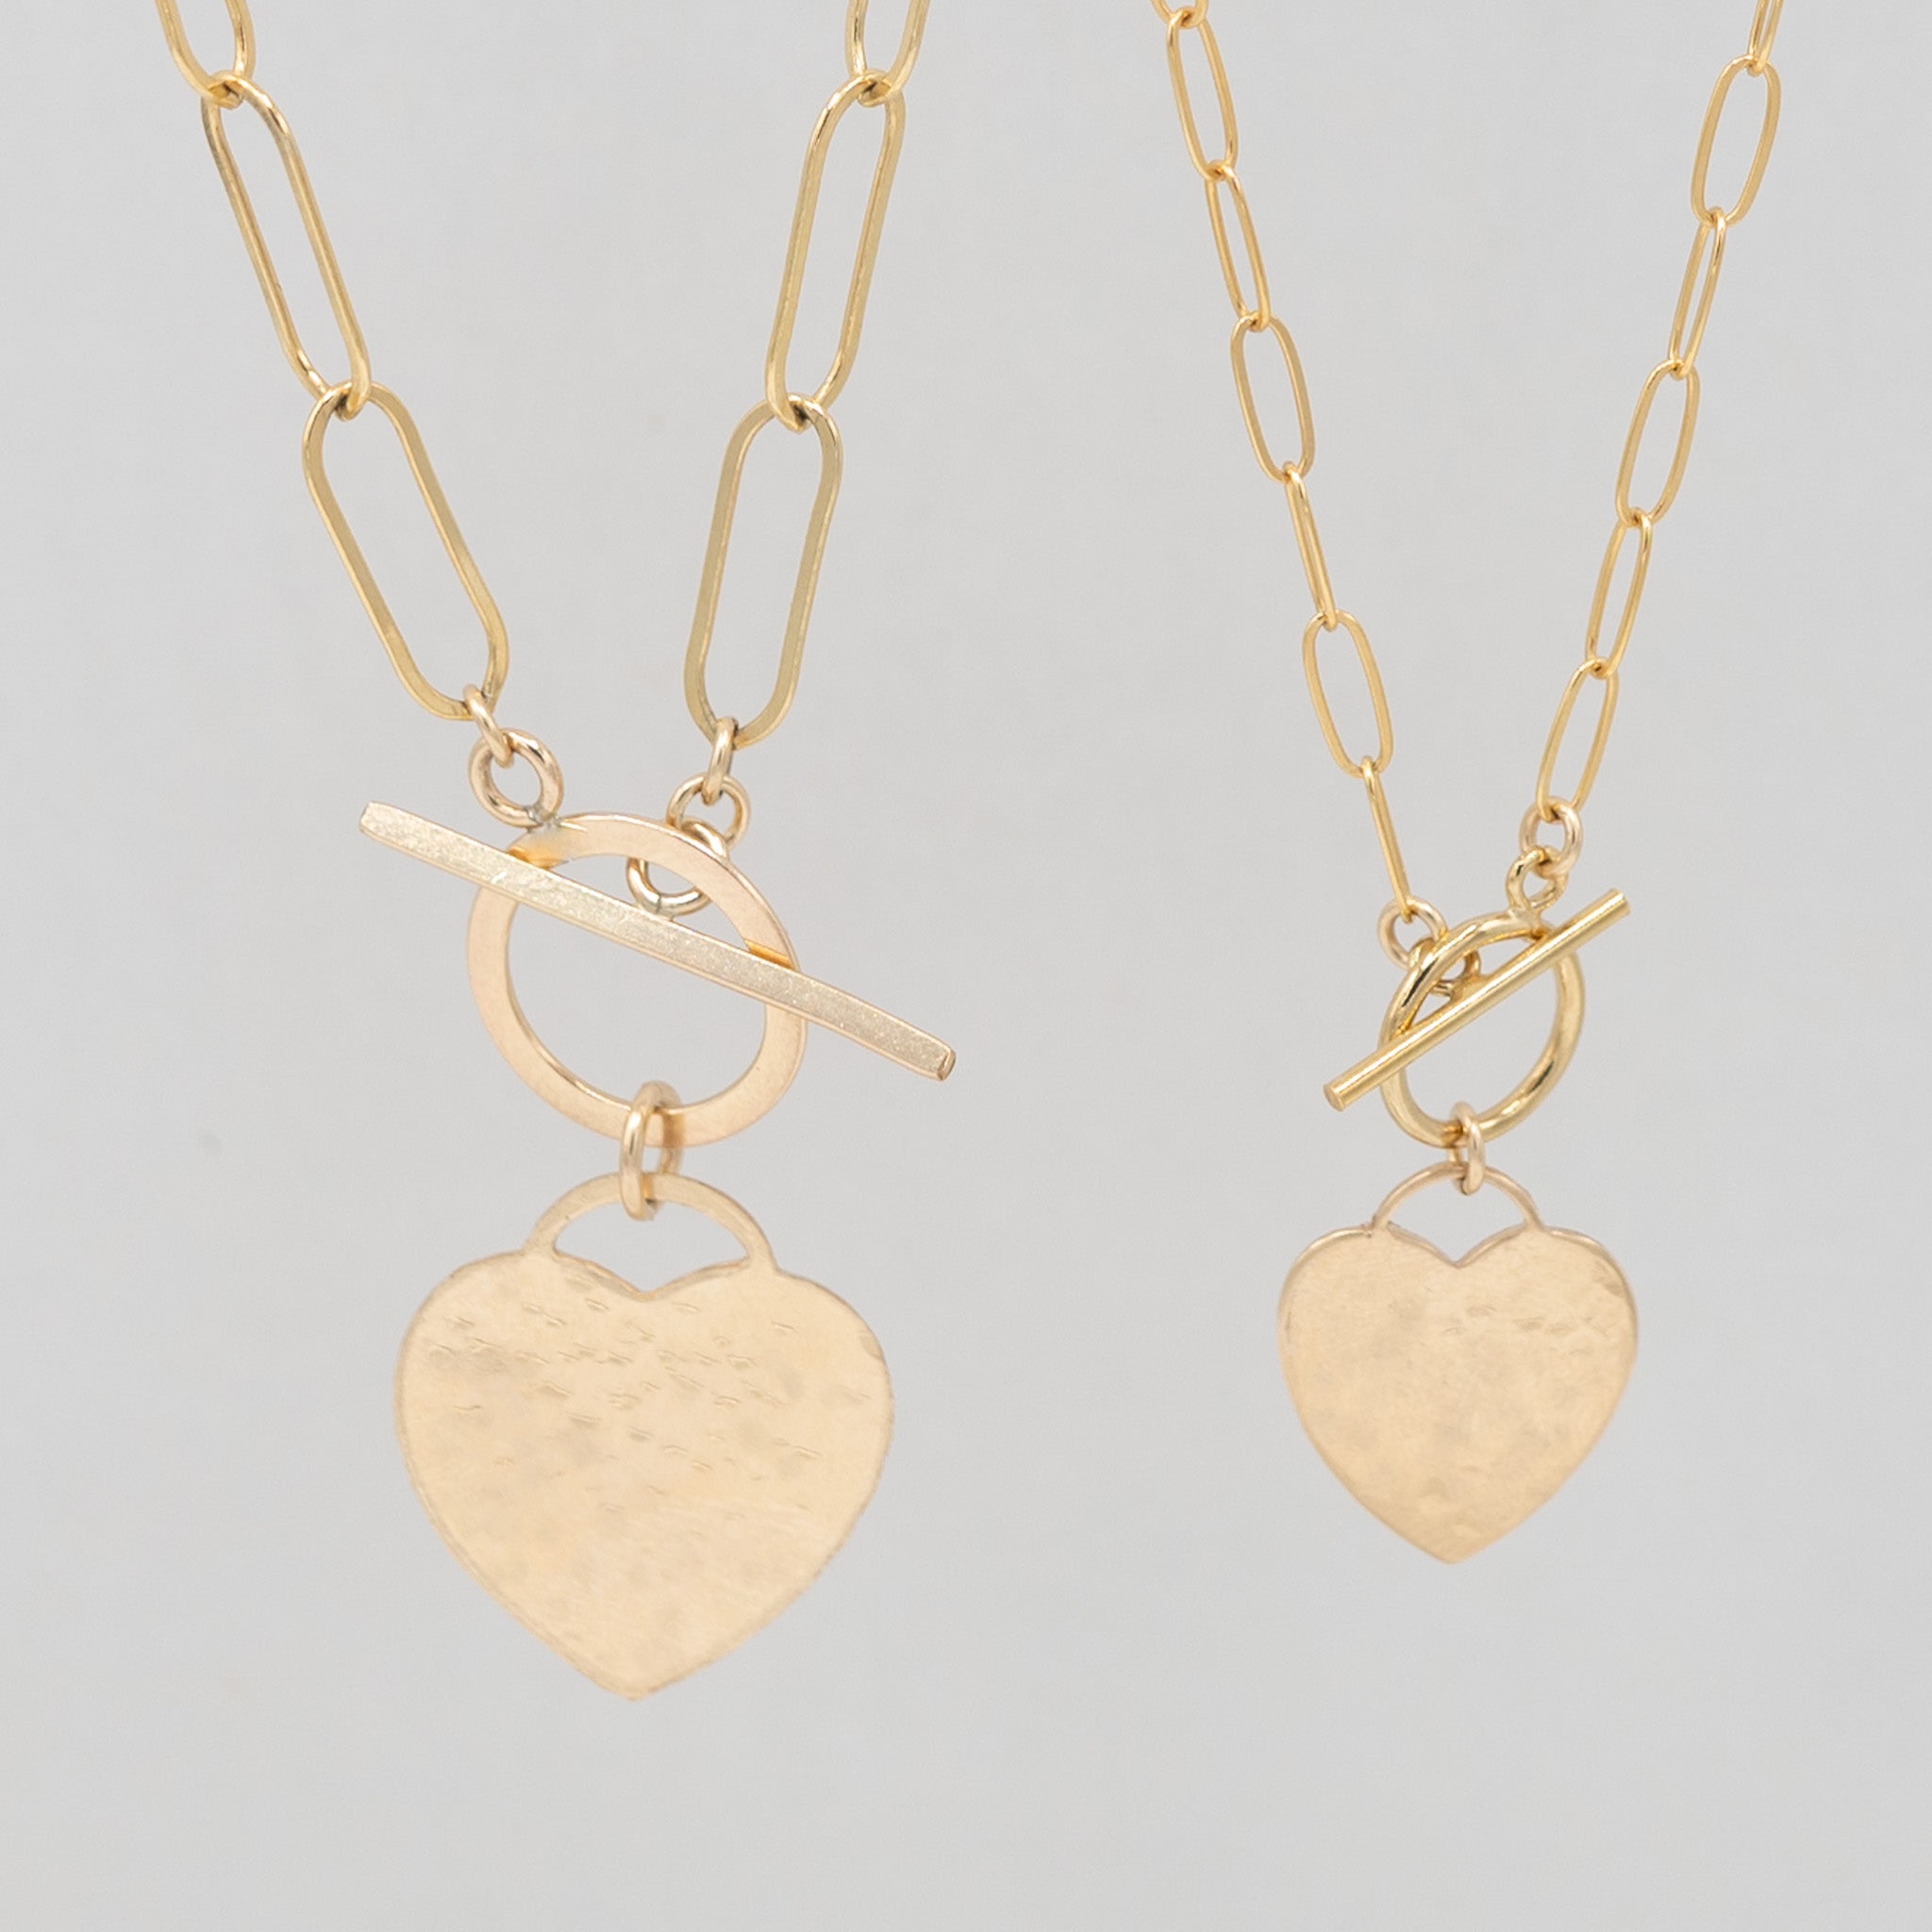 Medium 14k Gold Filled Heart Toggle Necklace